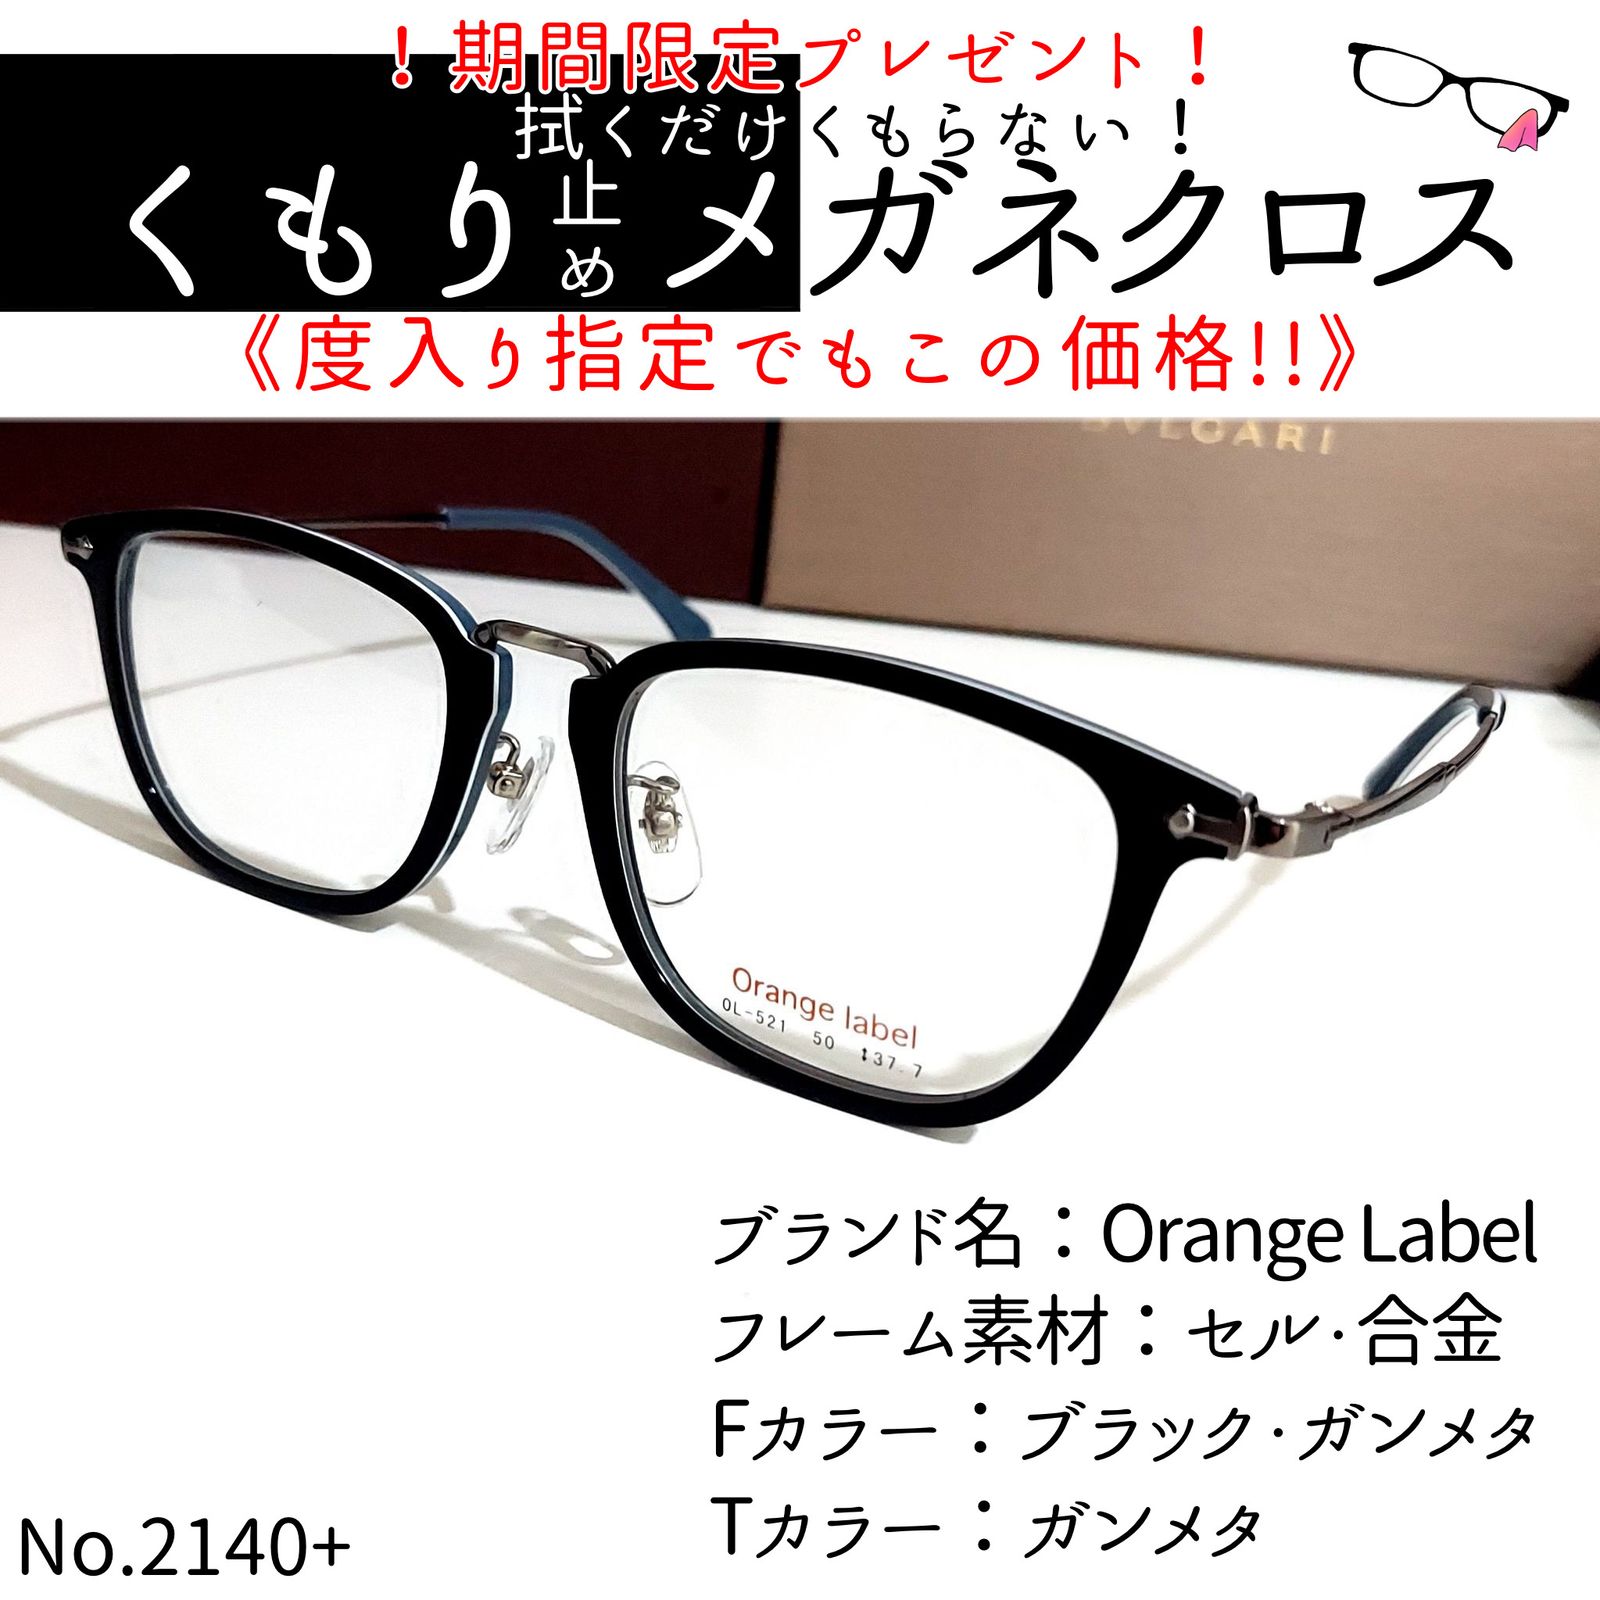 No.2140+メガネ Orange Label【度数入り込み価格】-